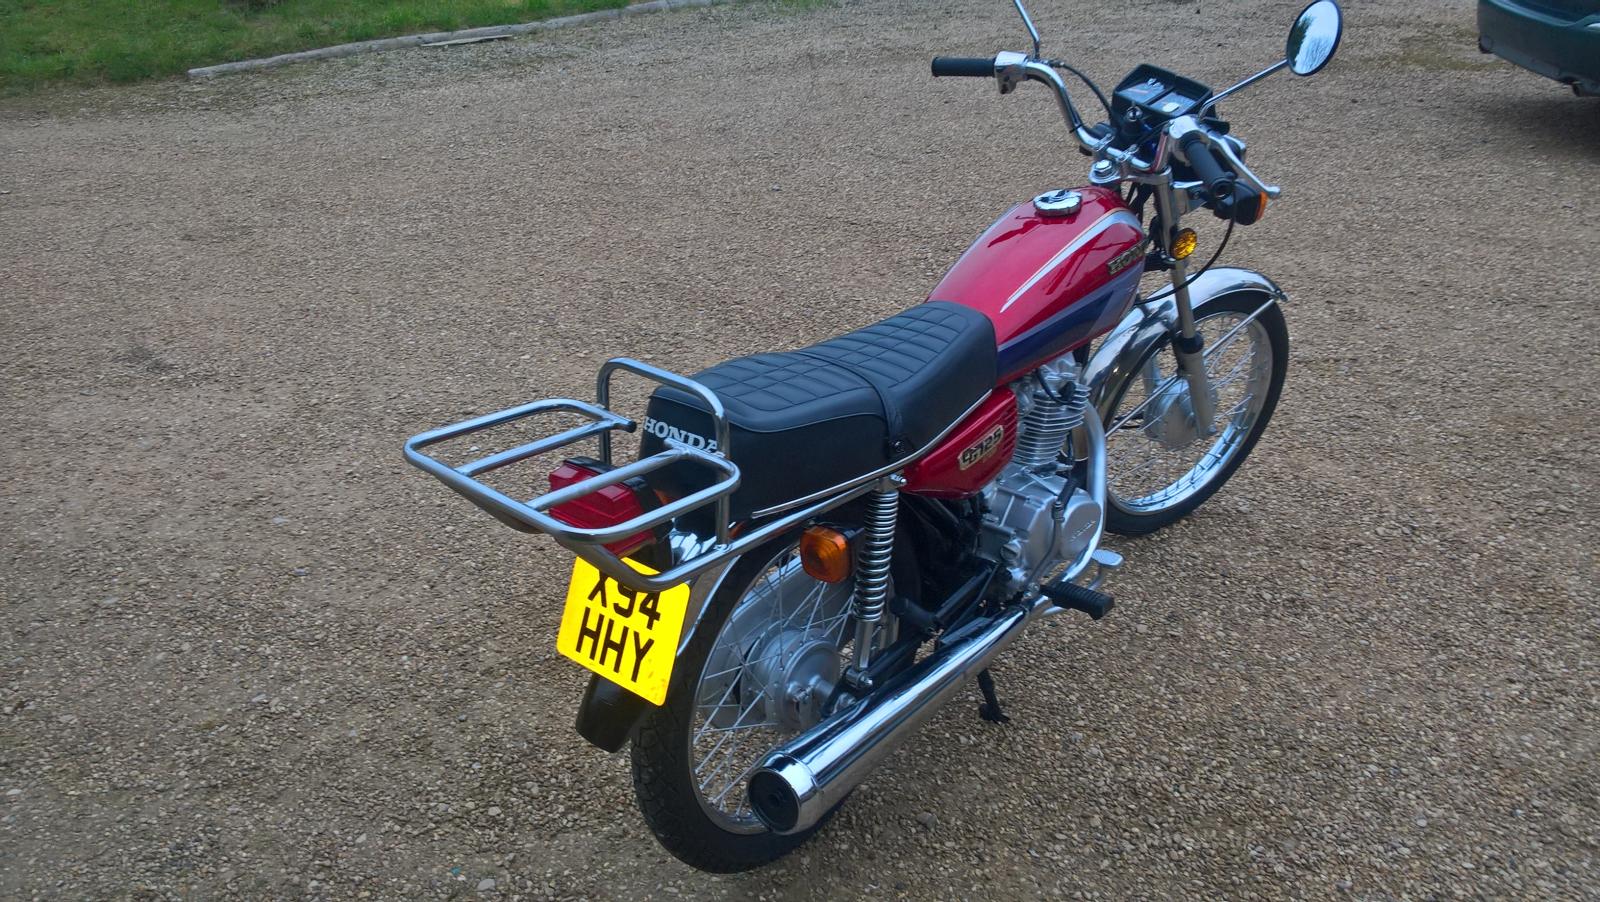 1000-honda-cg-125-cdi-motorbike-almost-perfect-condition-fun-and